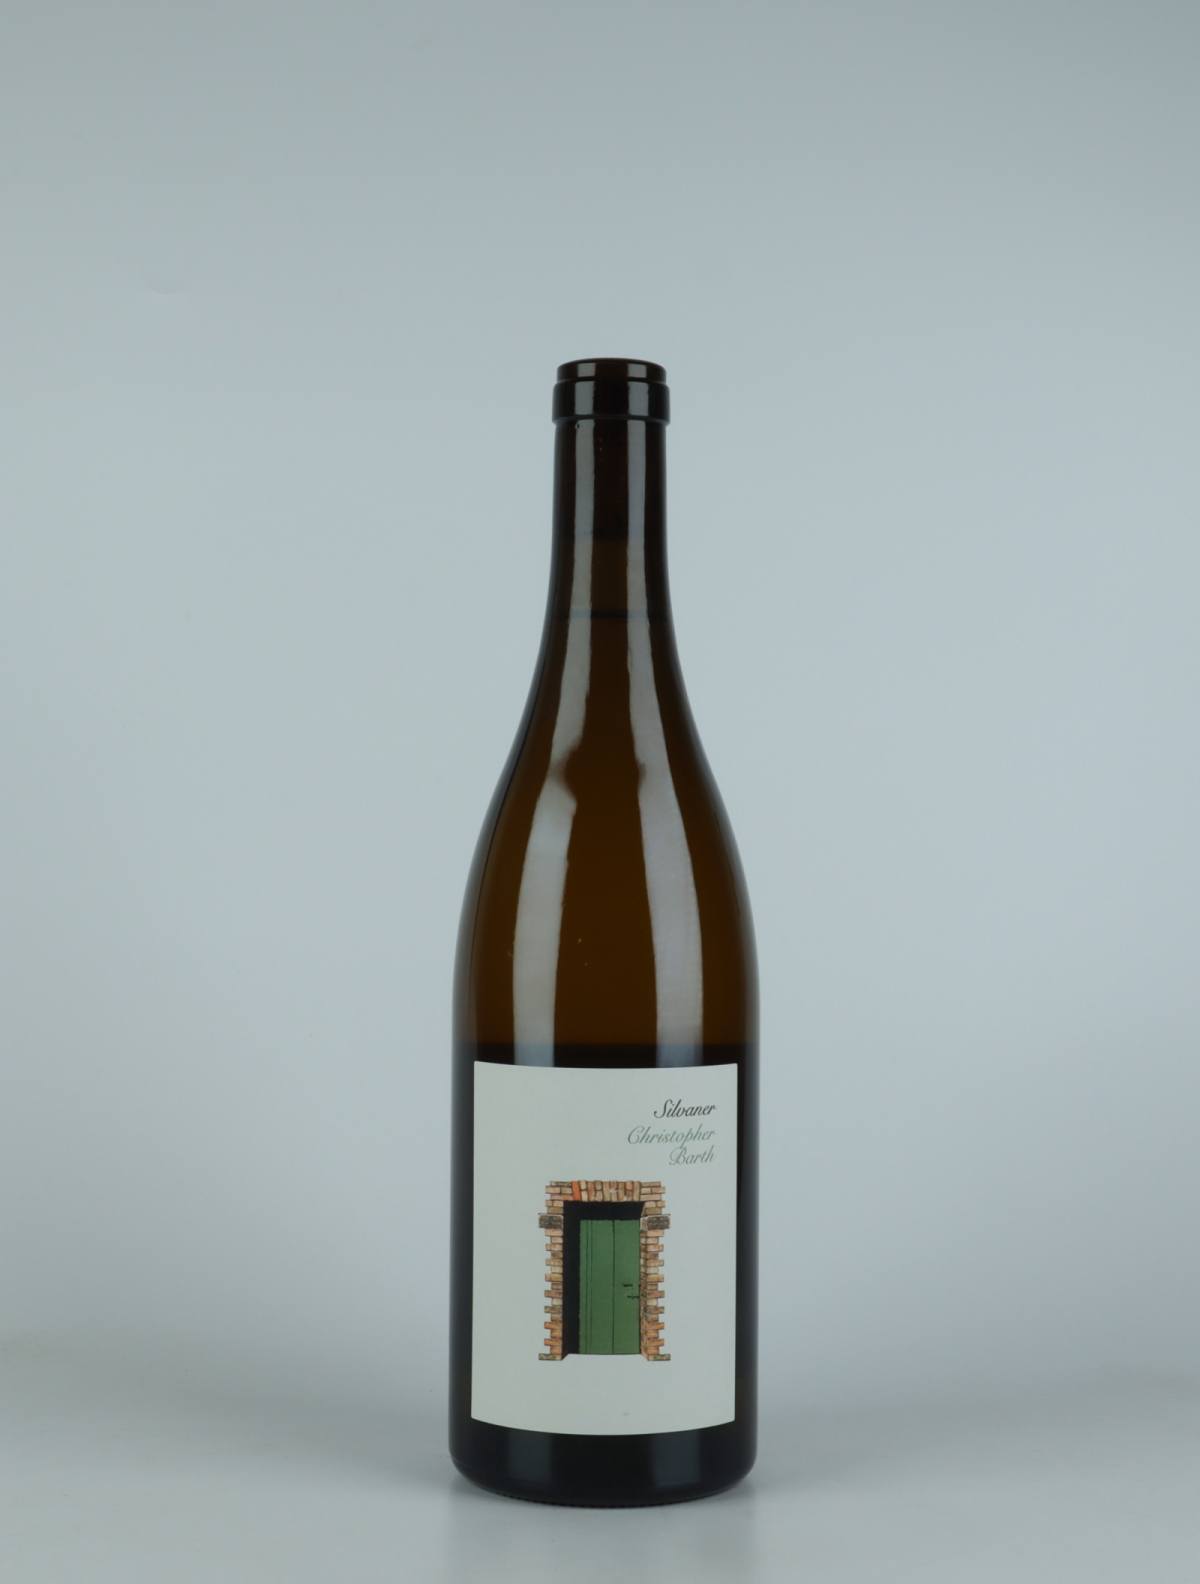 A bottle 2020 Silvaner White wine from Christopher Barth, Rheinhessen in Germany